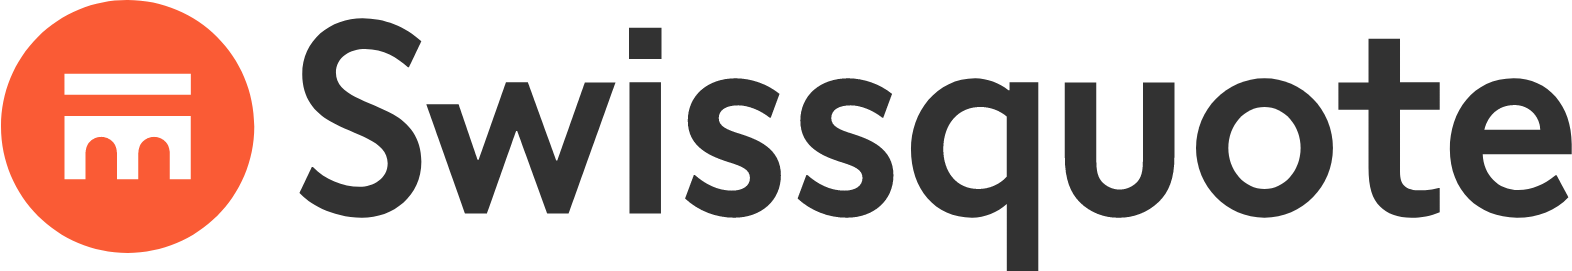 Swissquote logo large (transparent PNG)